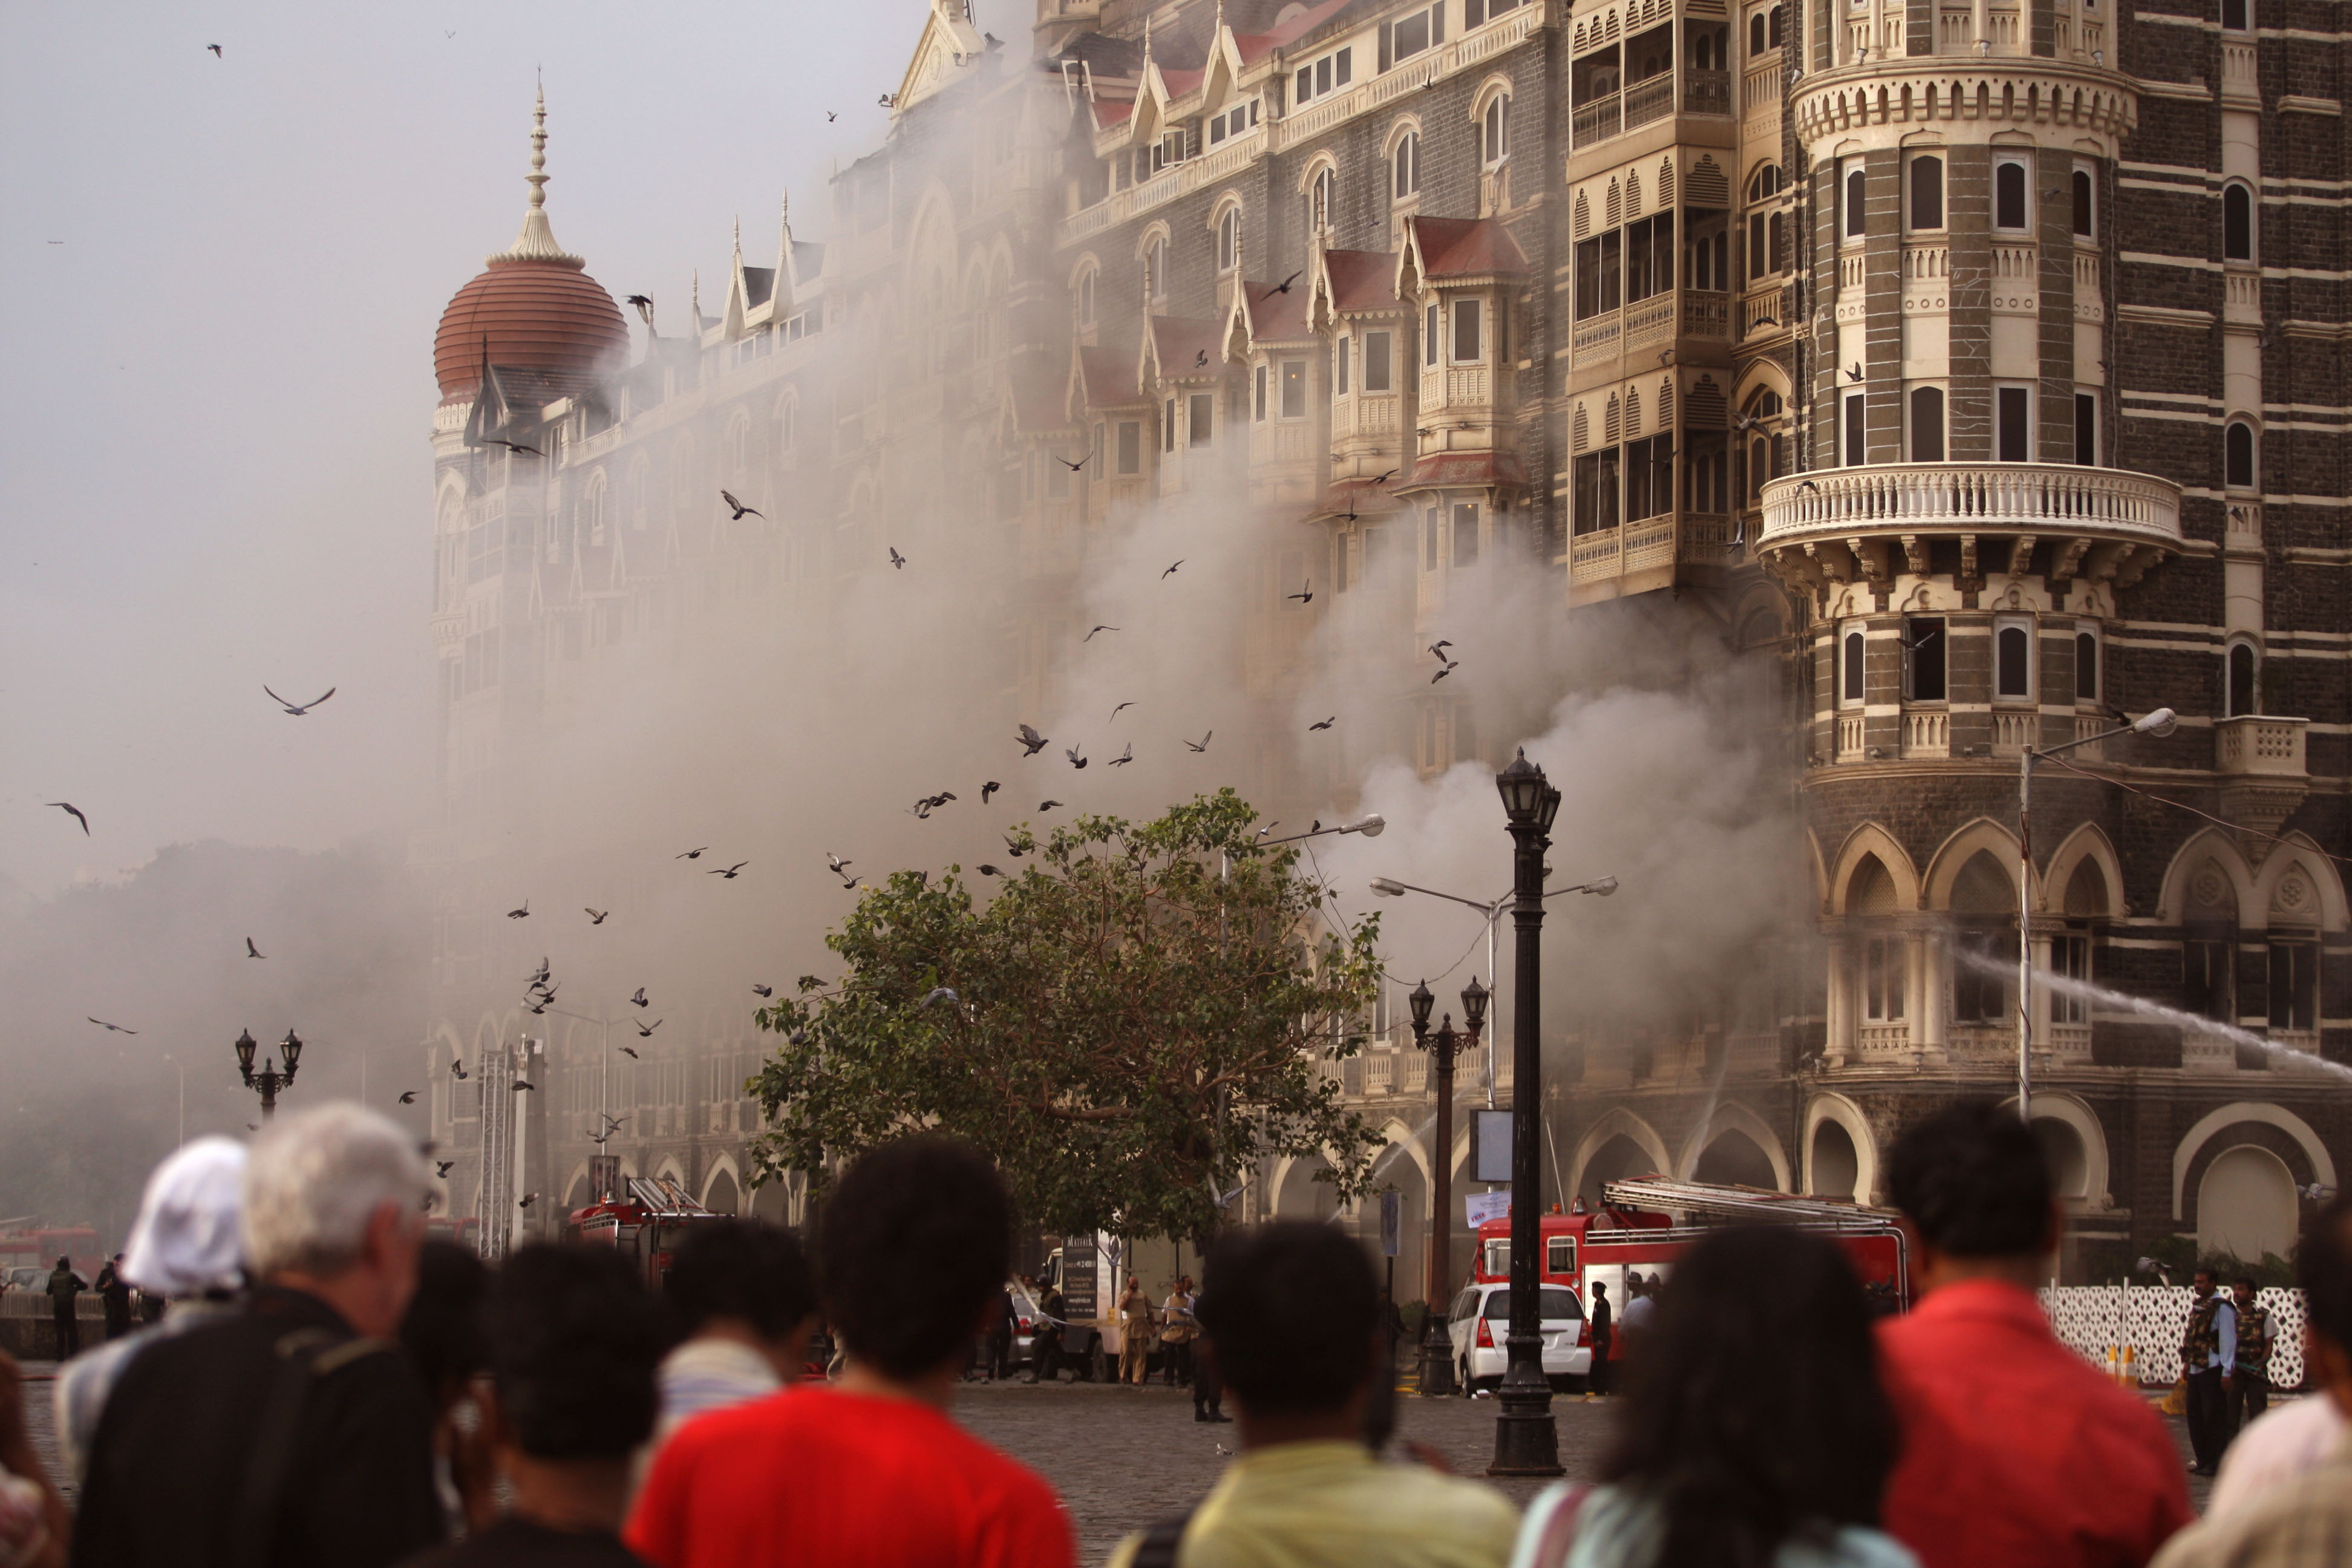 Нападение на мумбаи. Мумбаи 2008 Тадж Махал теракт. Теракт в Индии 2008 Тадж Махал. Отель Мумбаи теракт 2008. Отель Тадж Махал 2008 теракт.